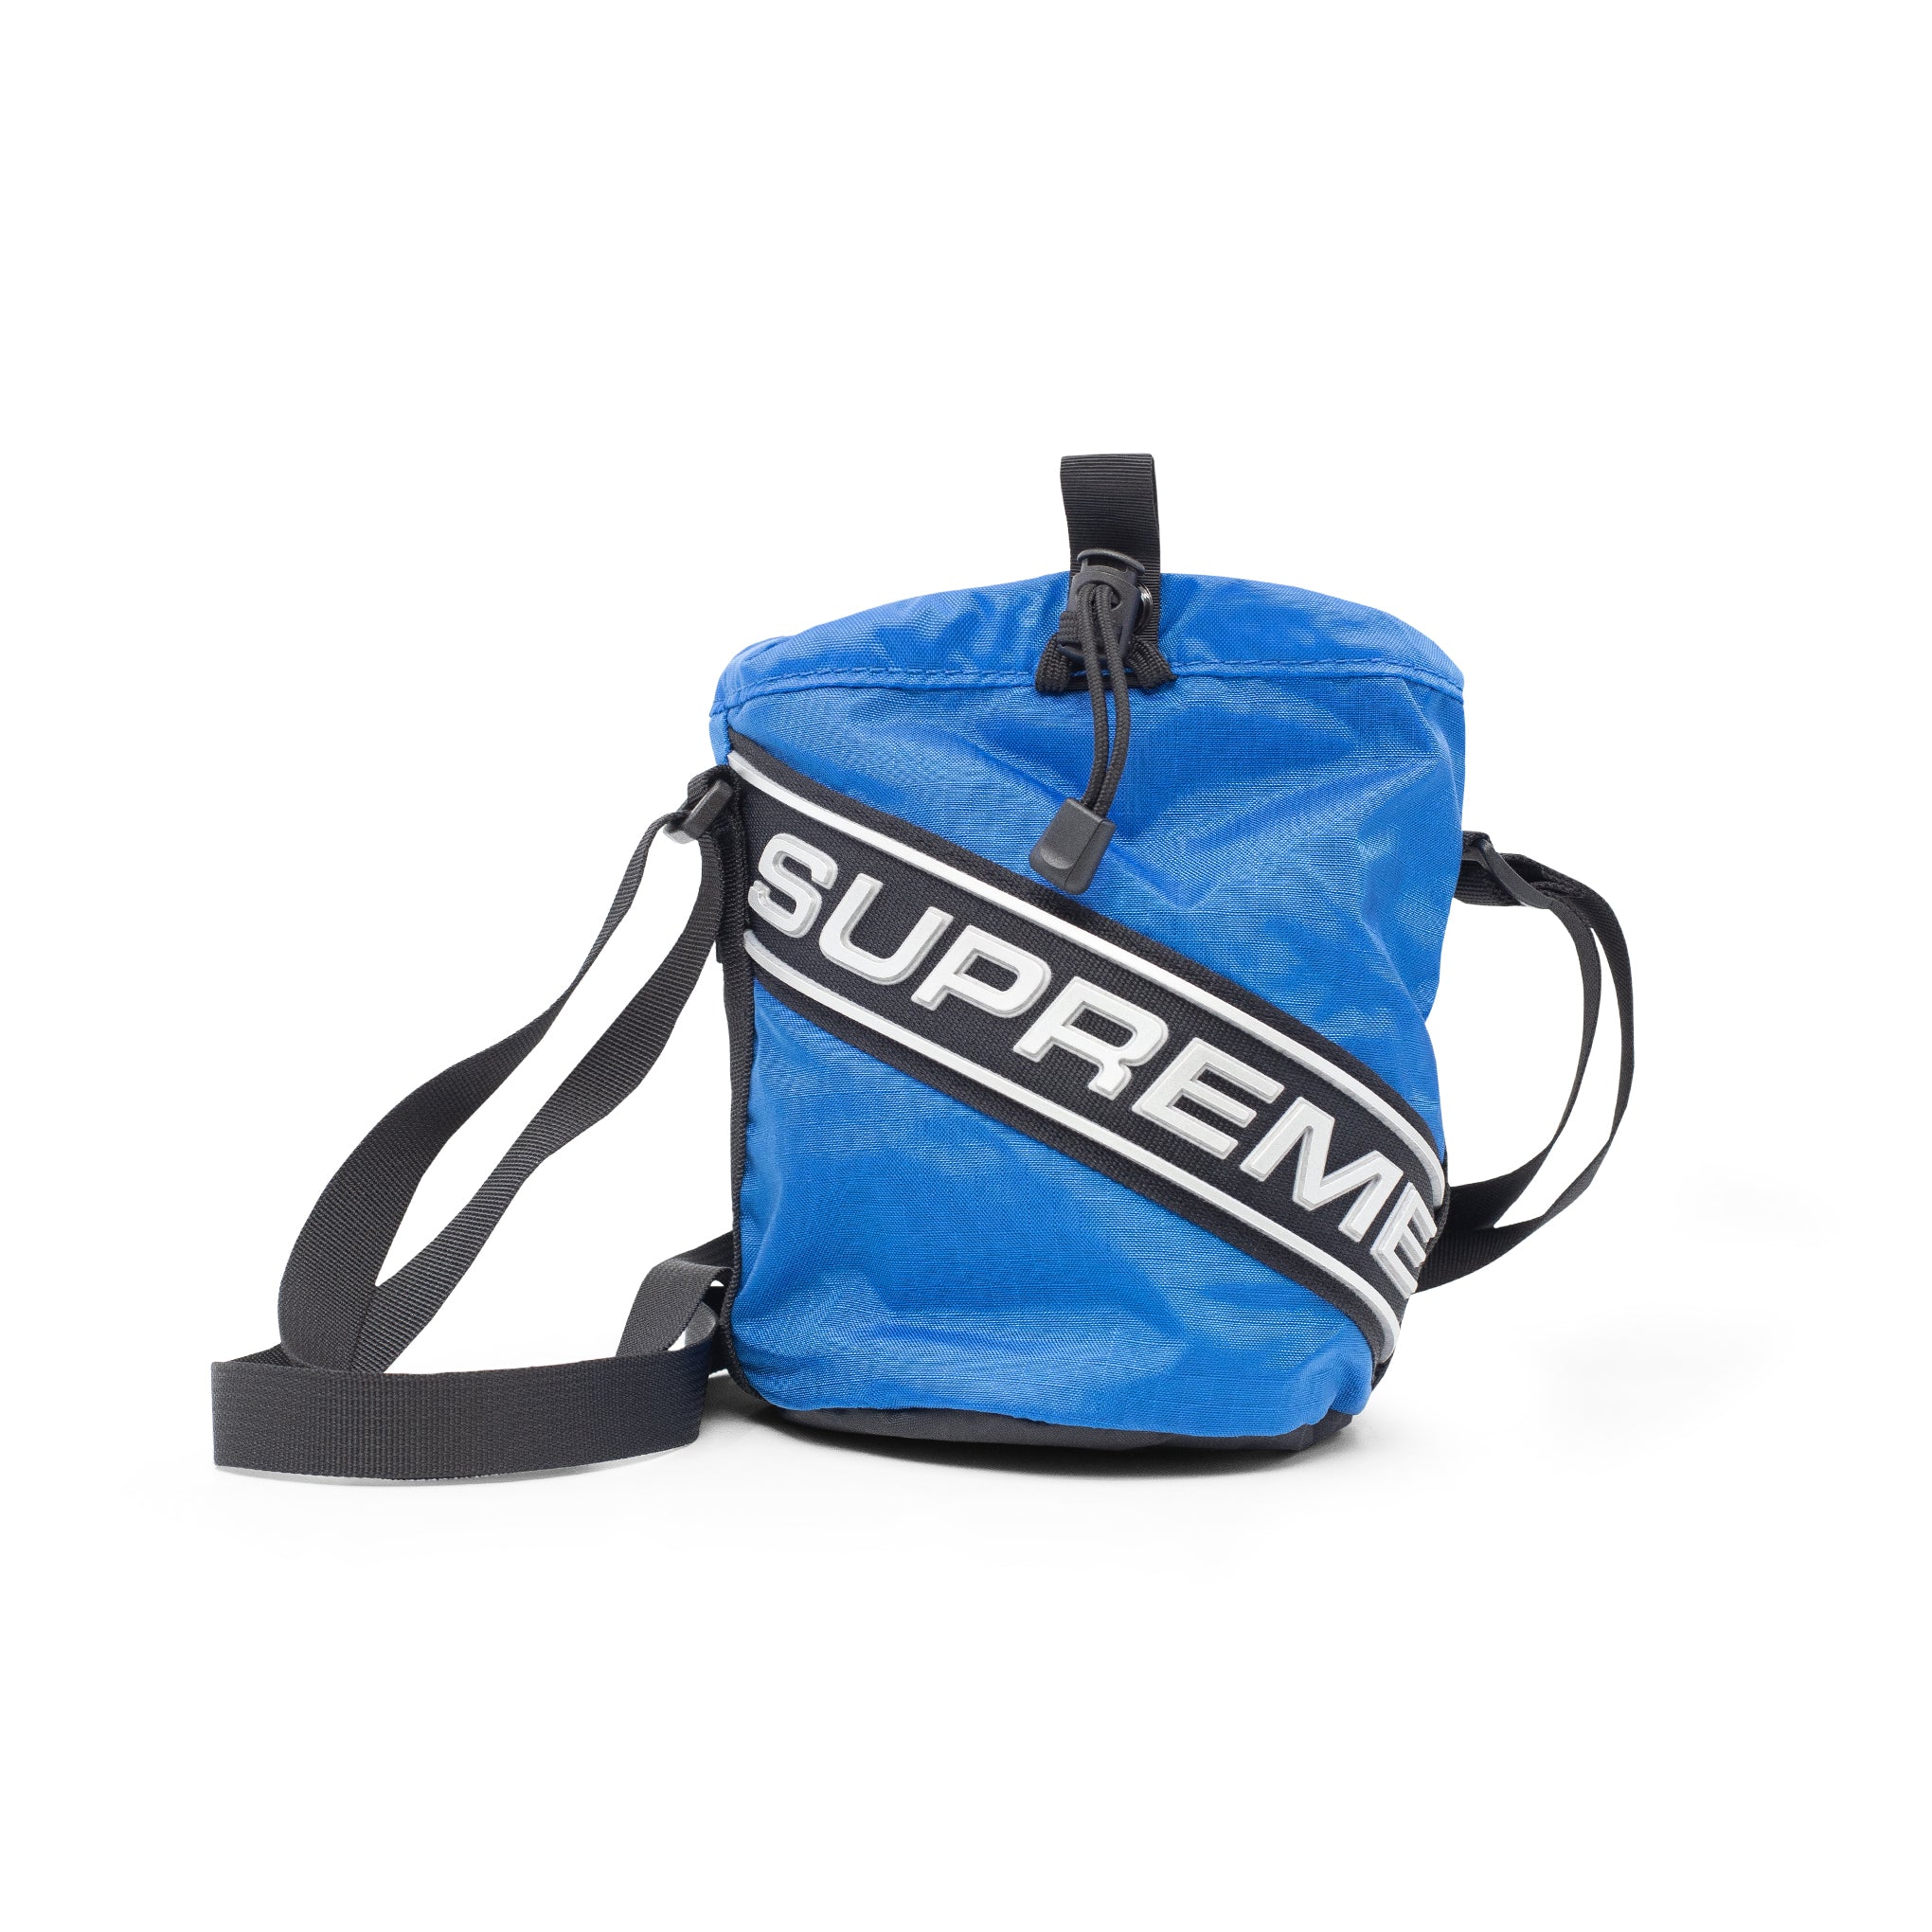 SUPREME 3D LOGO SMALL BAG BLUE